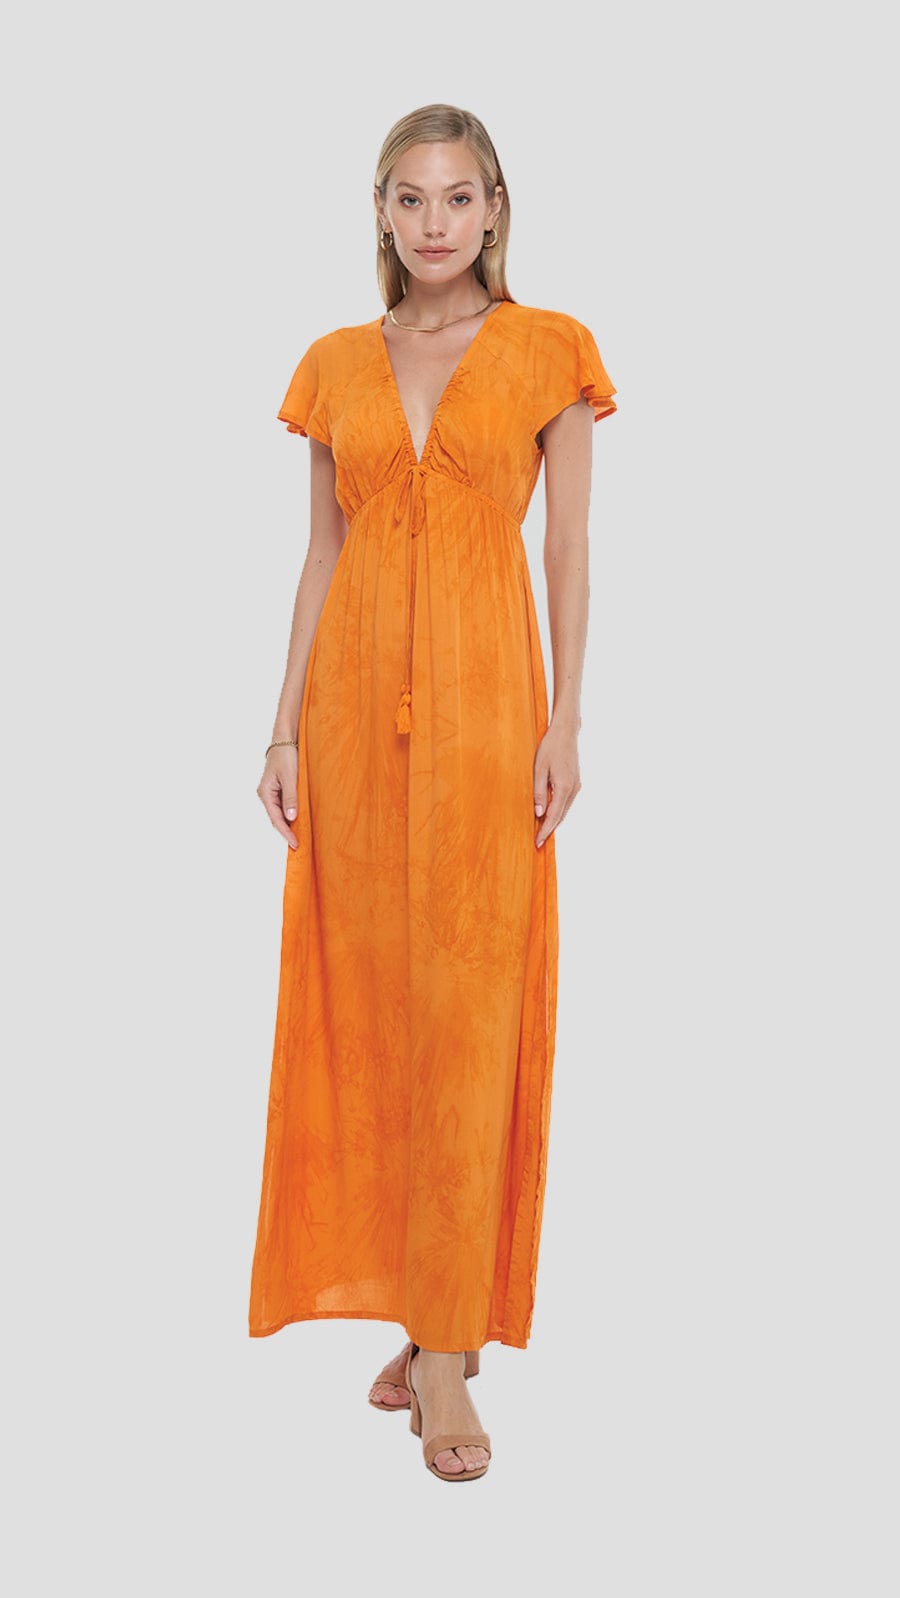 Tangerine Tiered Dress